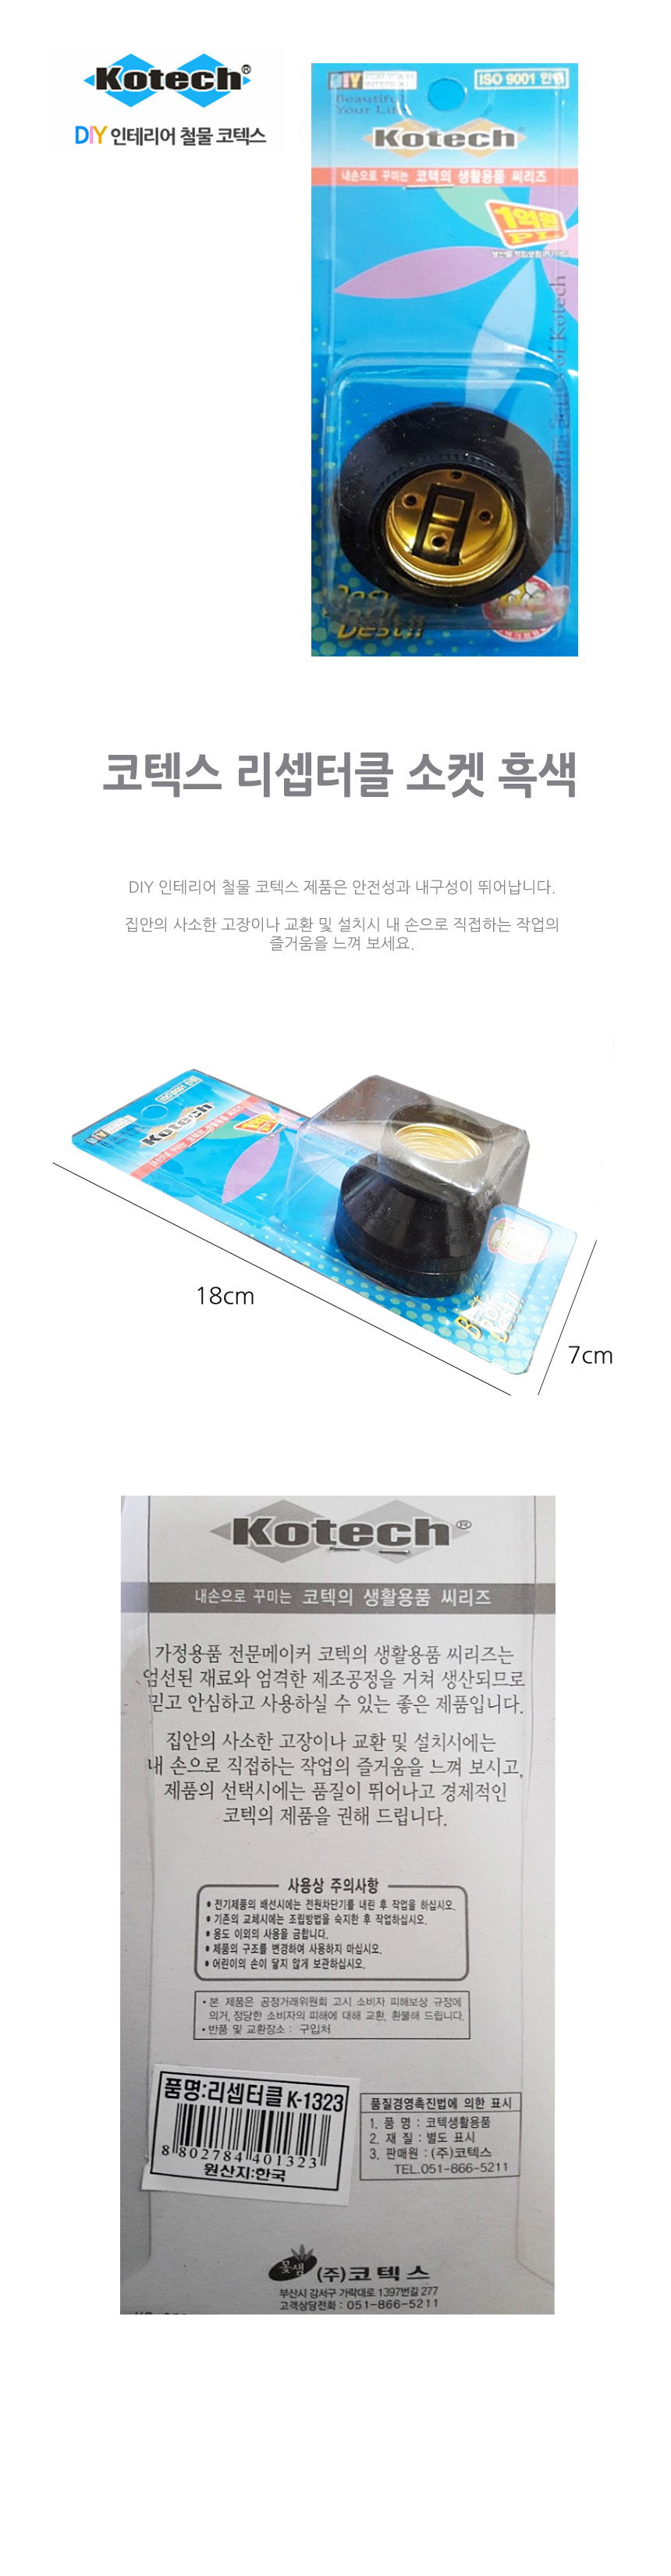 kotech-03-detail.jpg